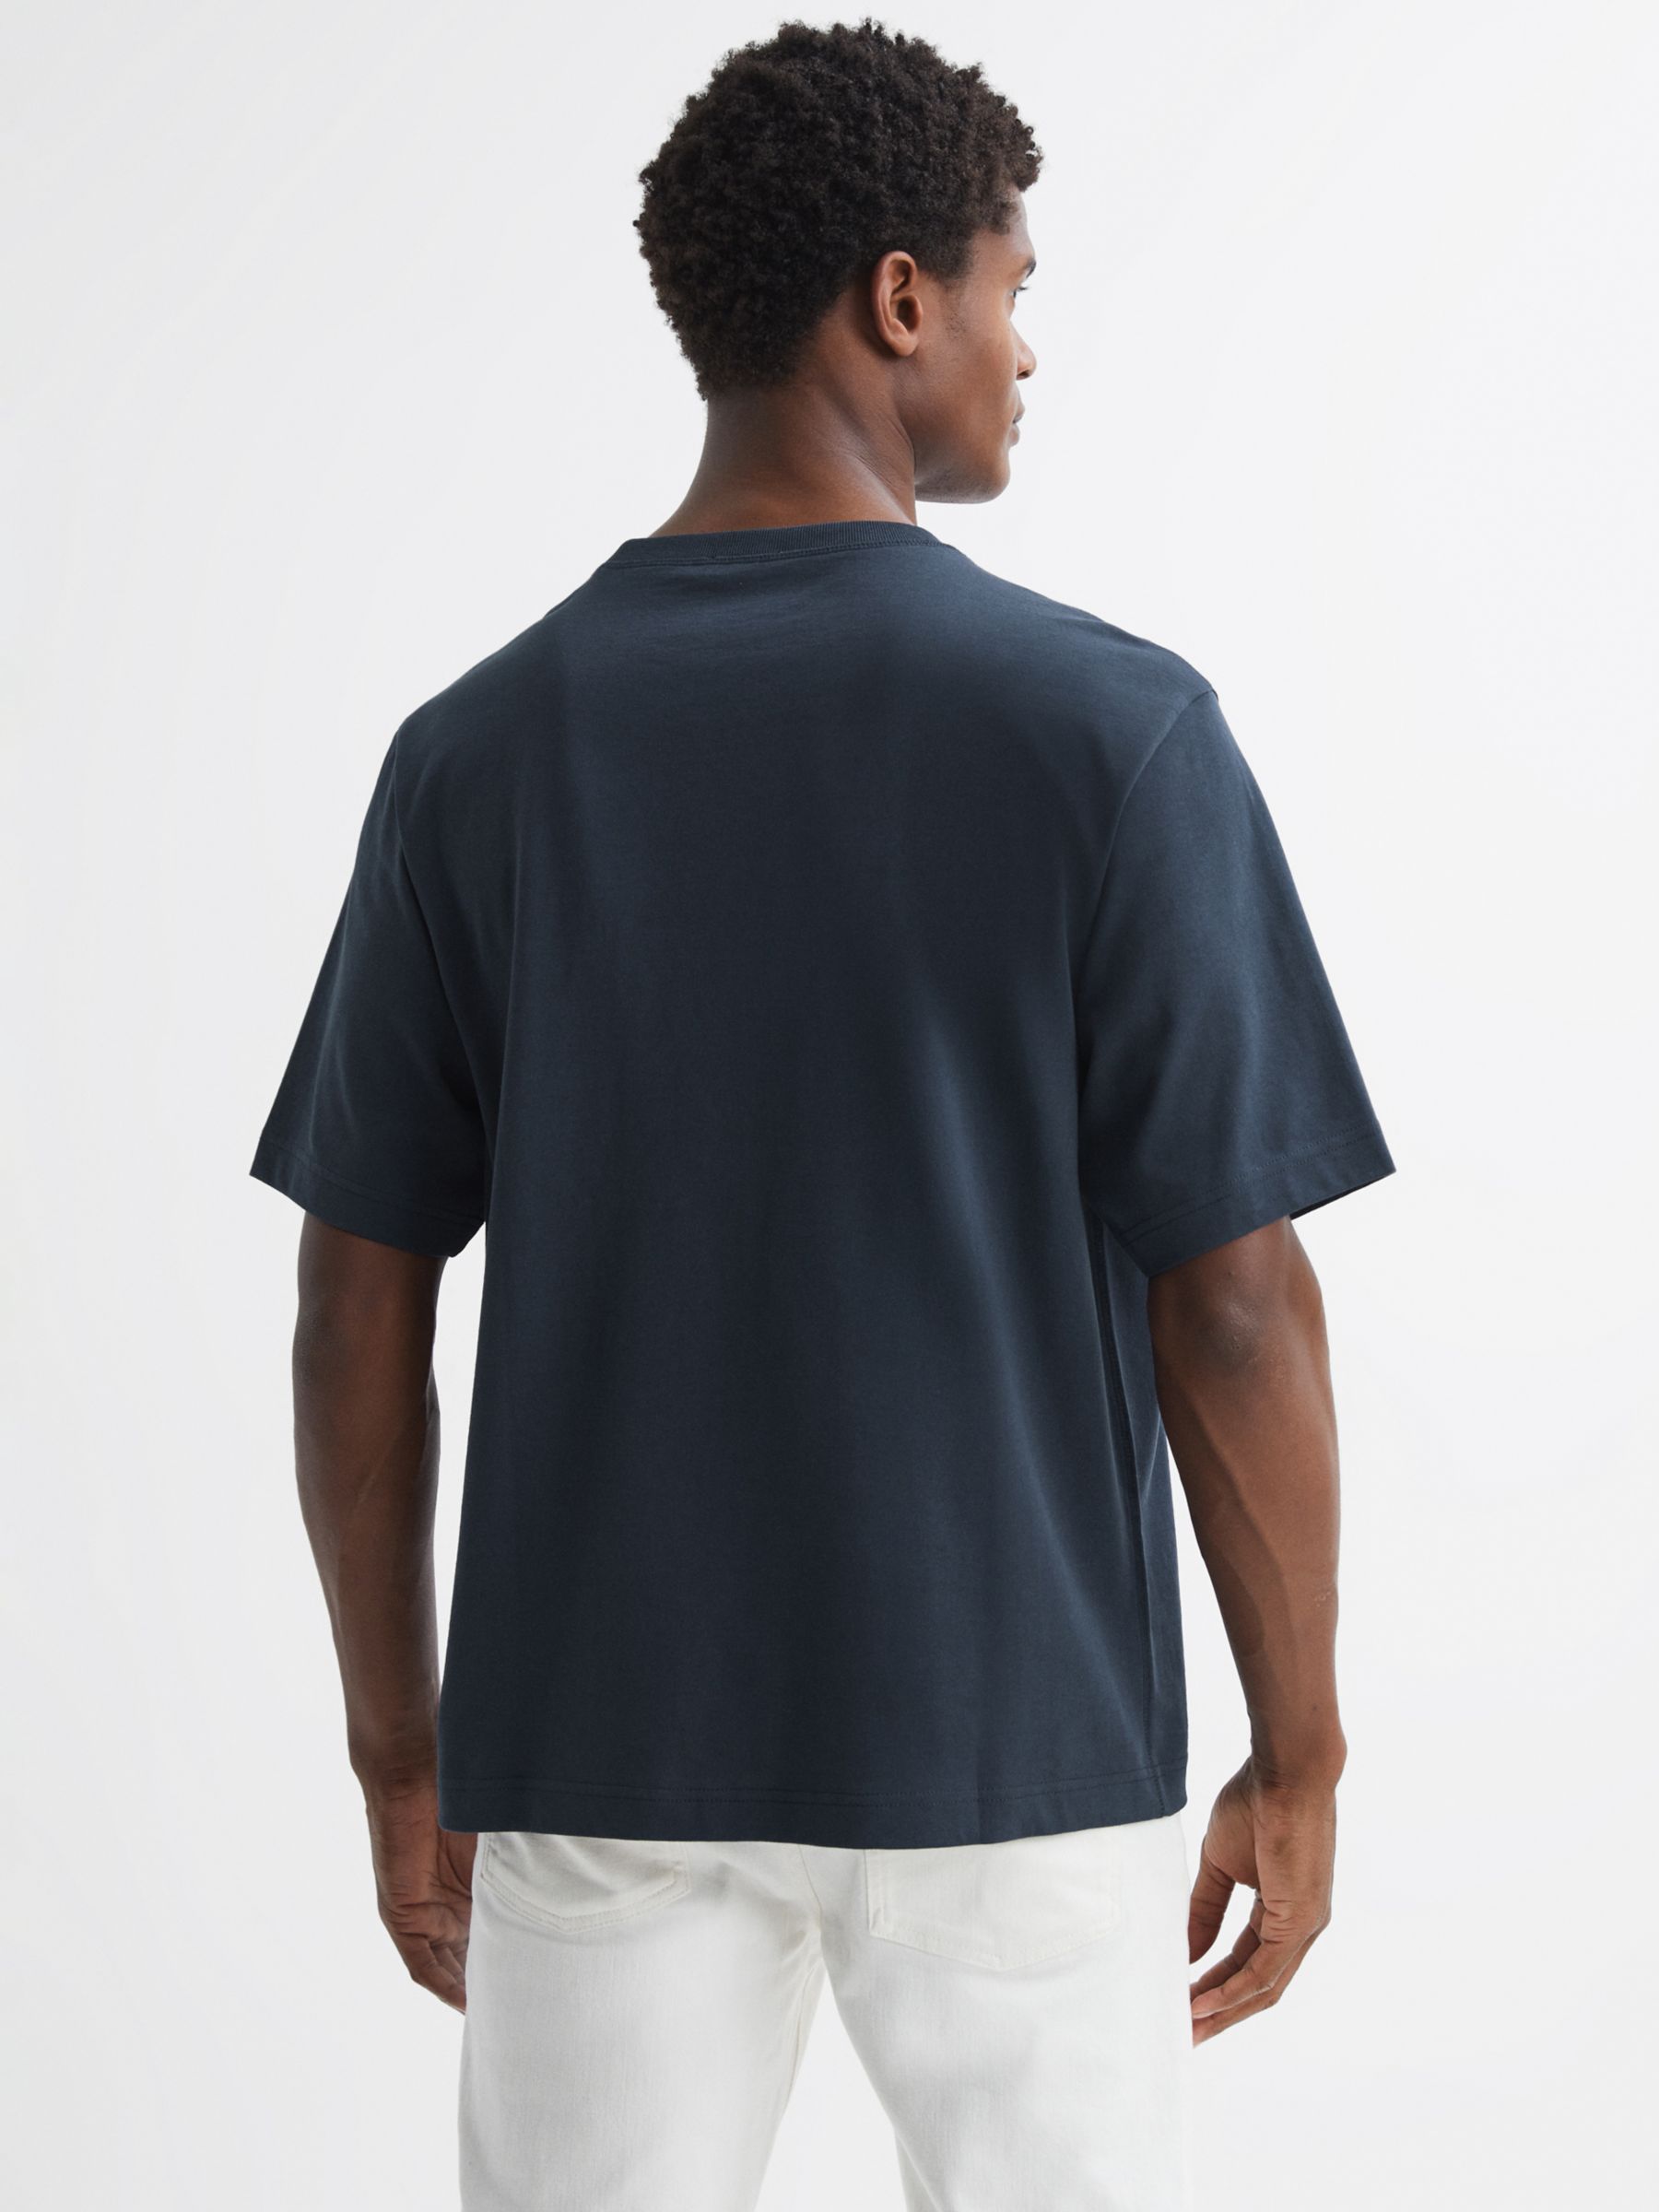 Reiss Tate Cotton Crew Neck T-Shirt, Eclipse Blue at John Lewis & Partners